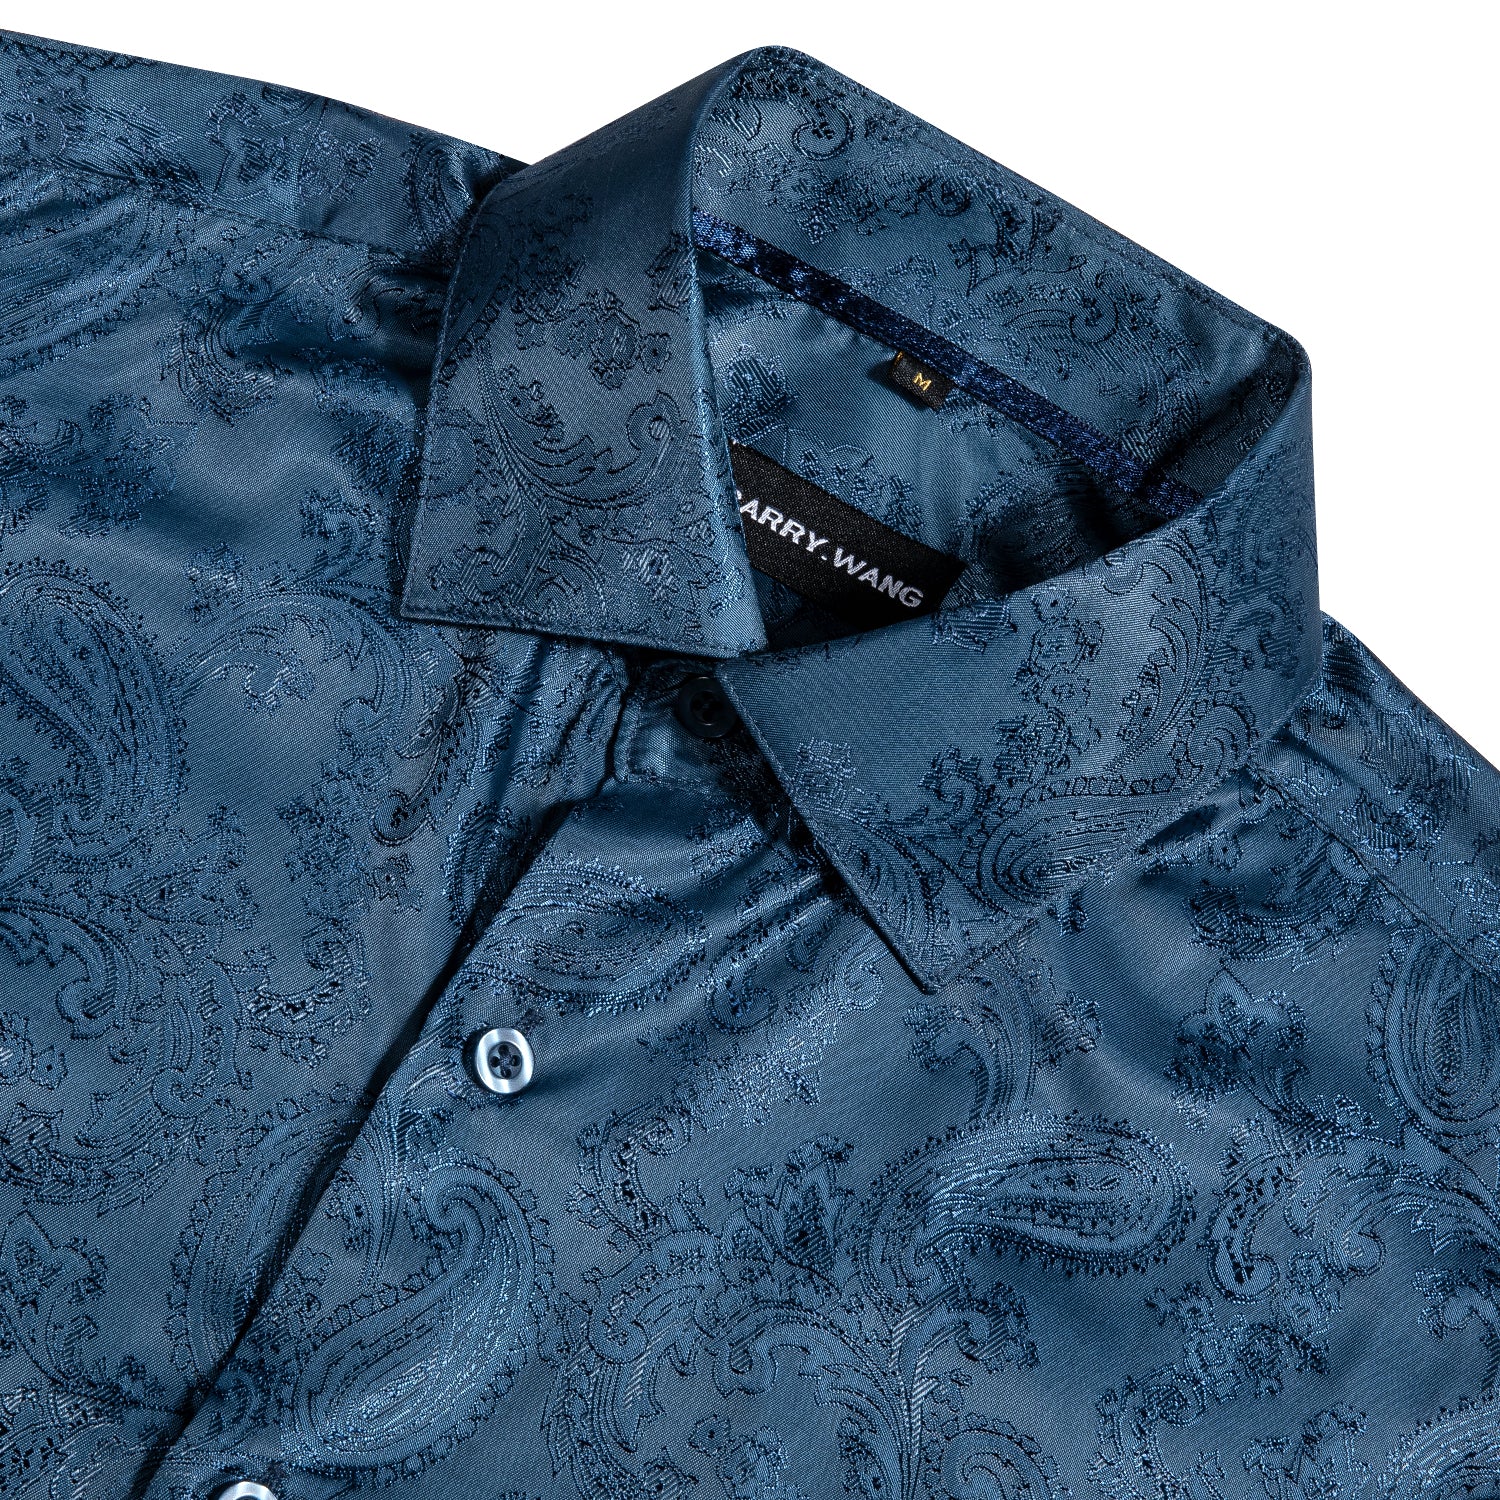 Barry.wang Luxury Navy Blue Paisley Long Sleeves Silk Shirt